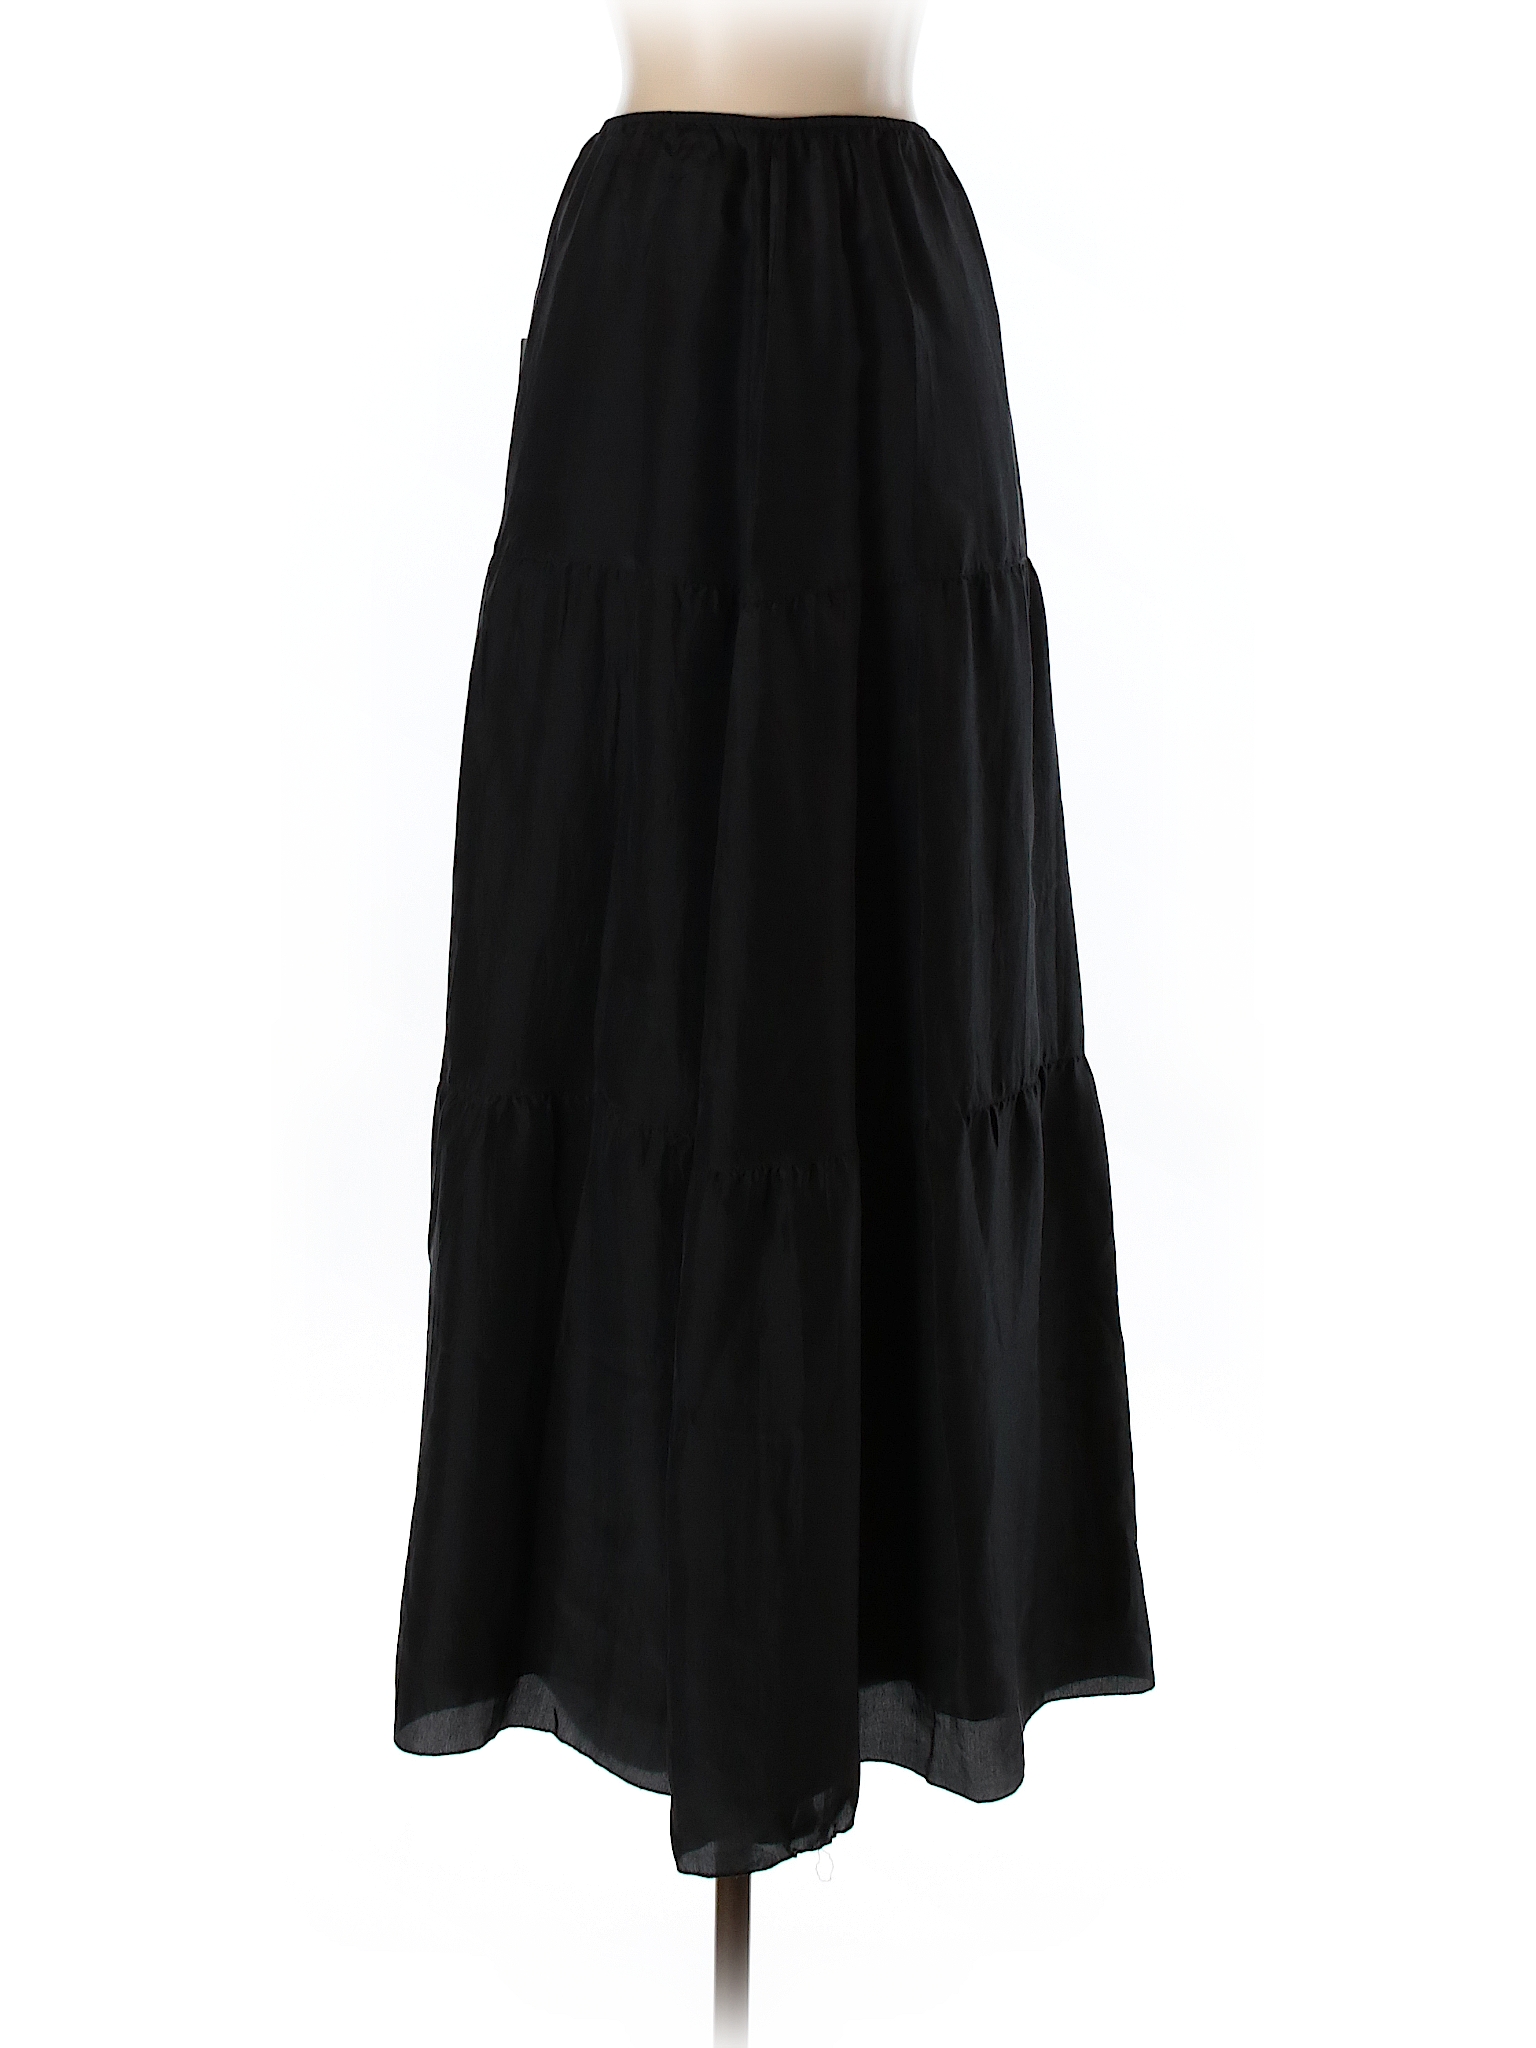 Eileen Fisher Silk Skirt - 93% off only on thredUP